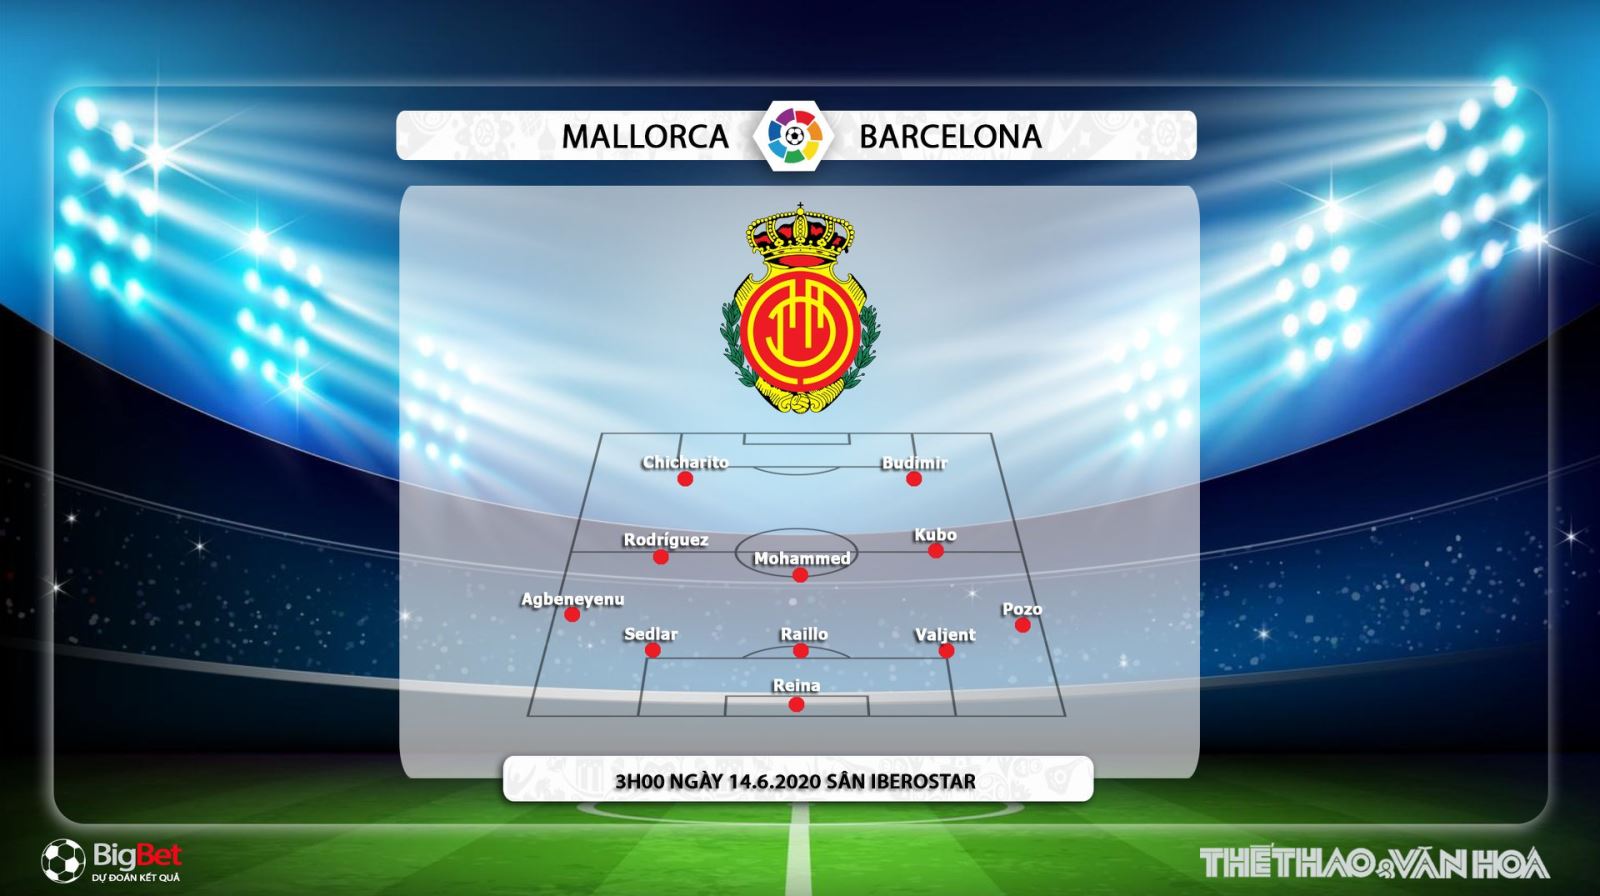 Mallorca vs Barcelona, nhận định bóng đá, nhận định, bóng đá, bong da, bong da hom nay, Mallorca, Barcelona